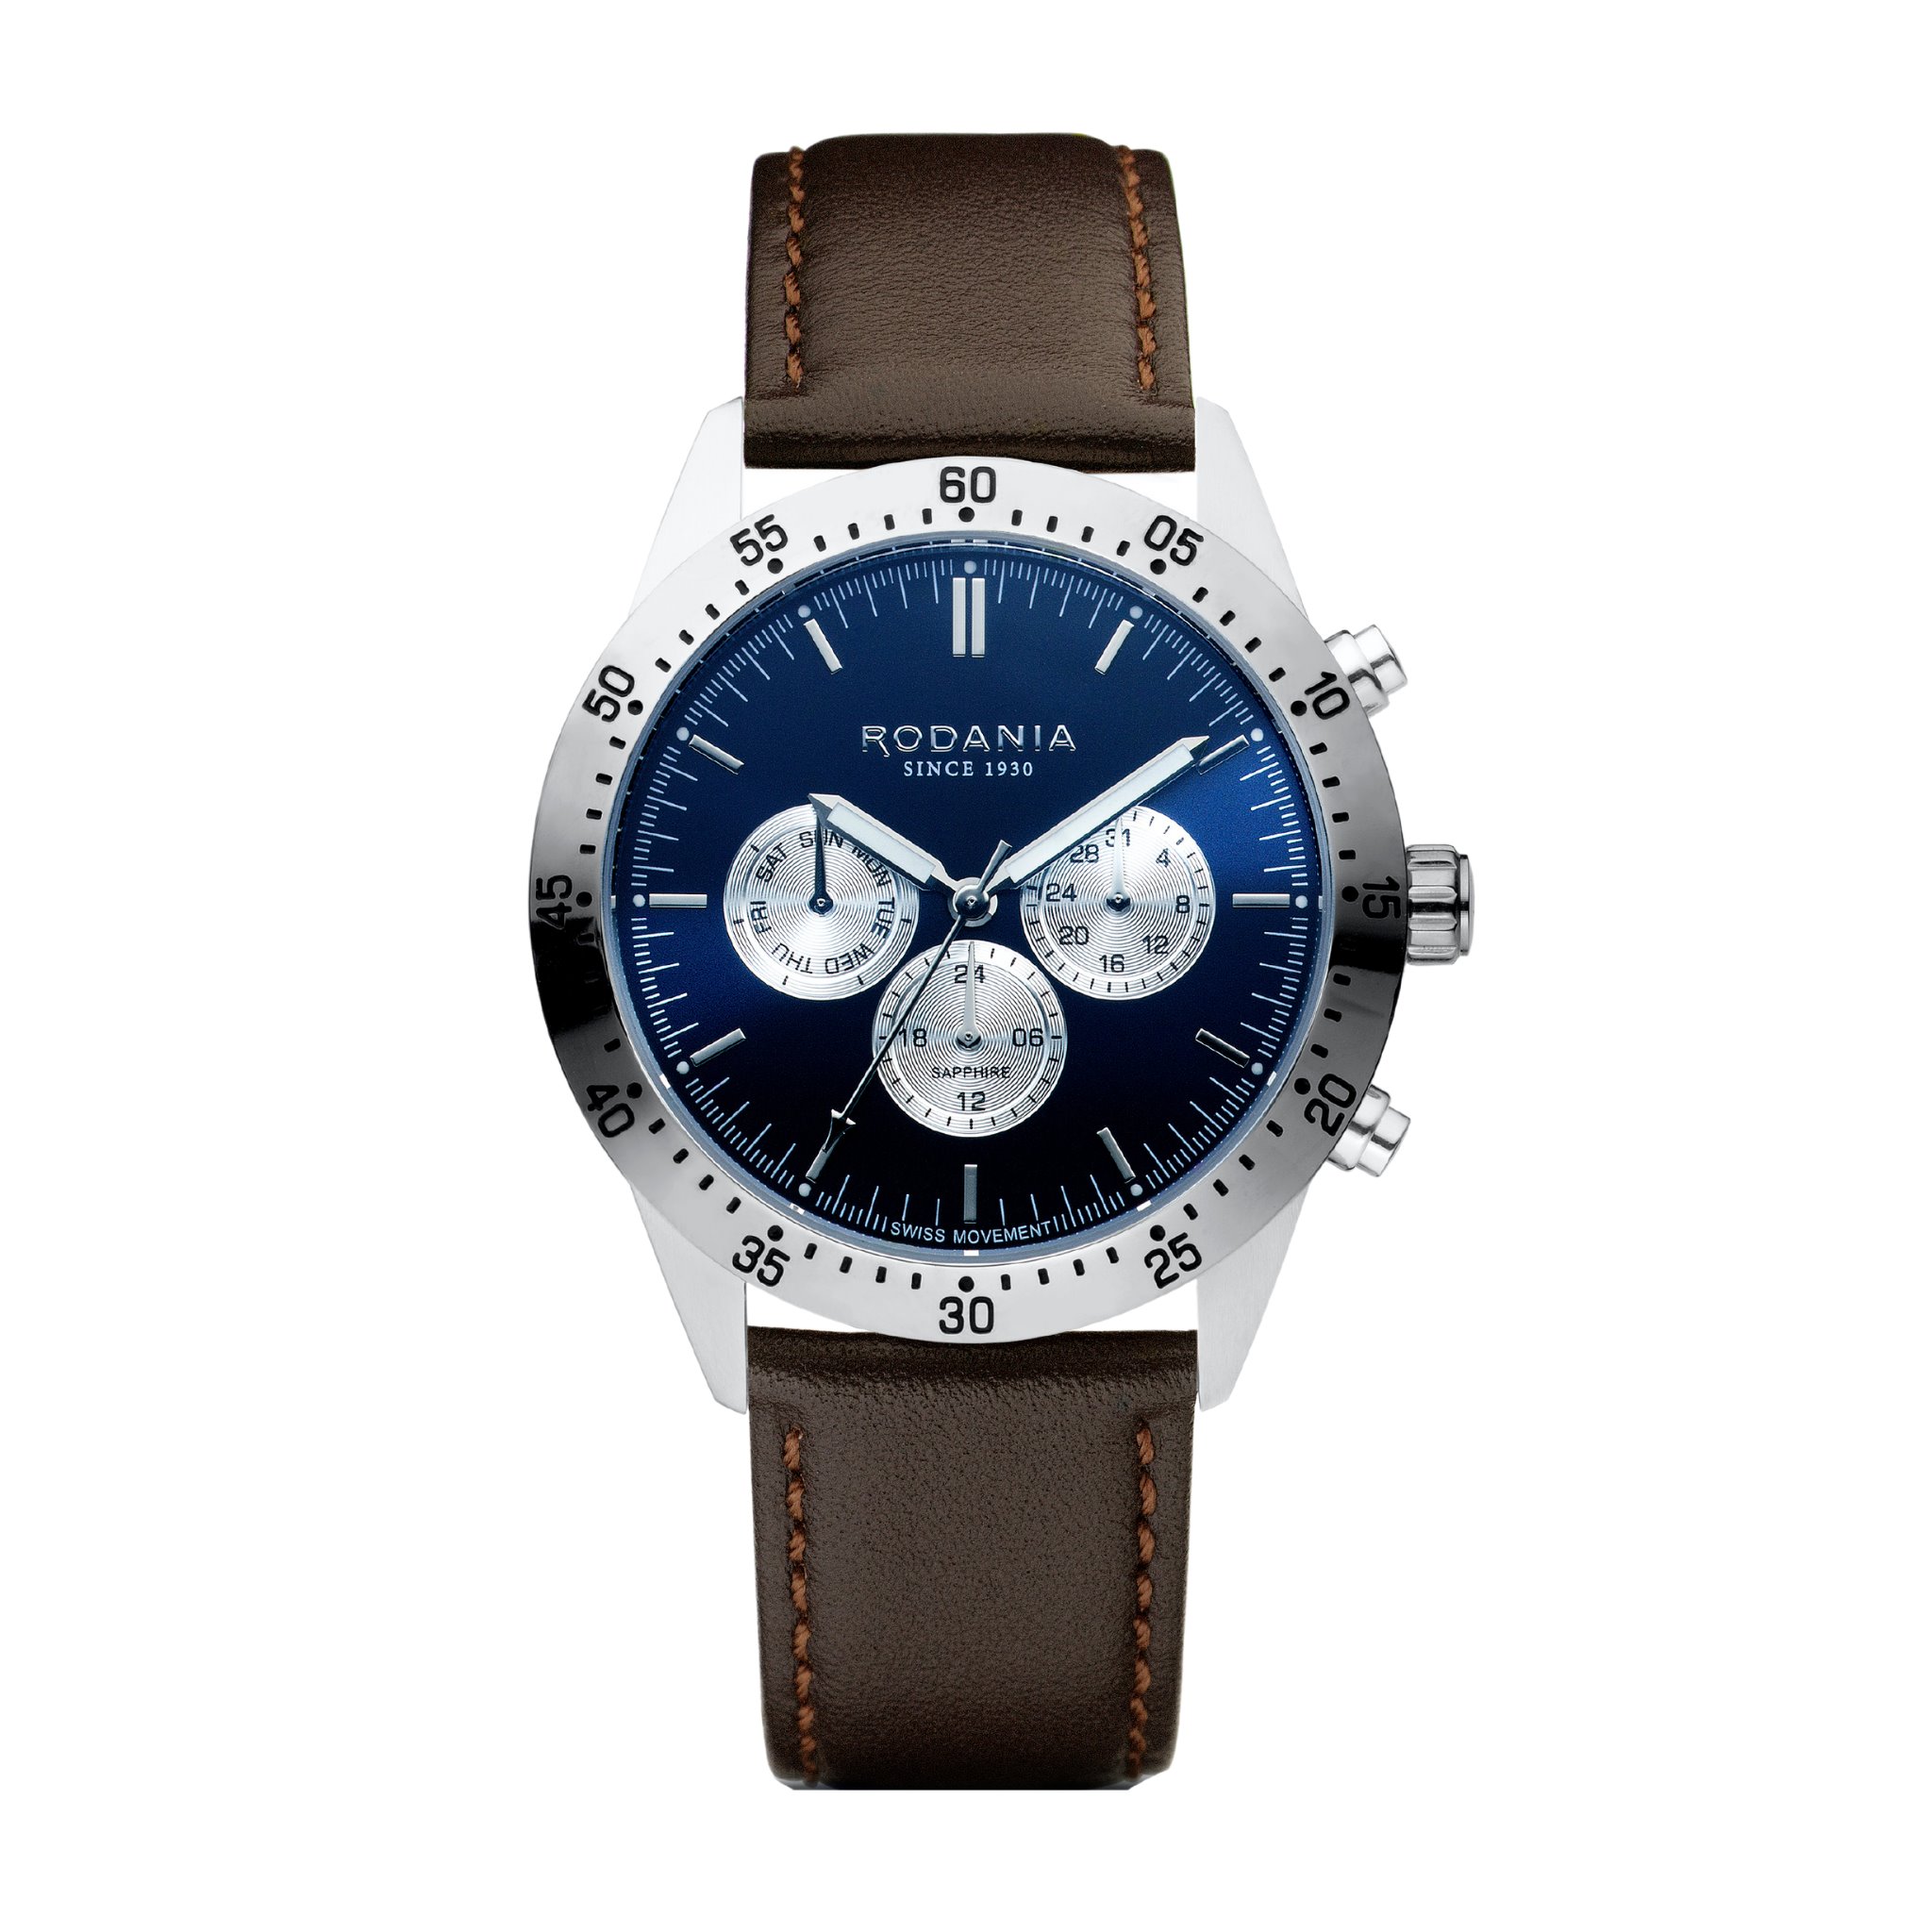 ALPINE – Rodania – Our watches